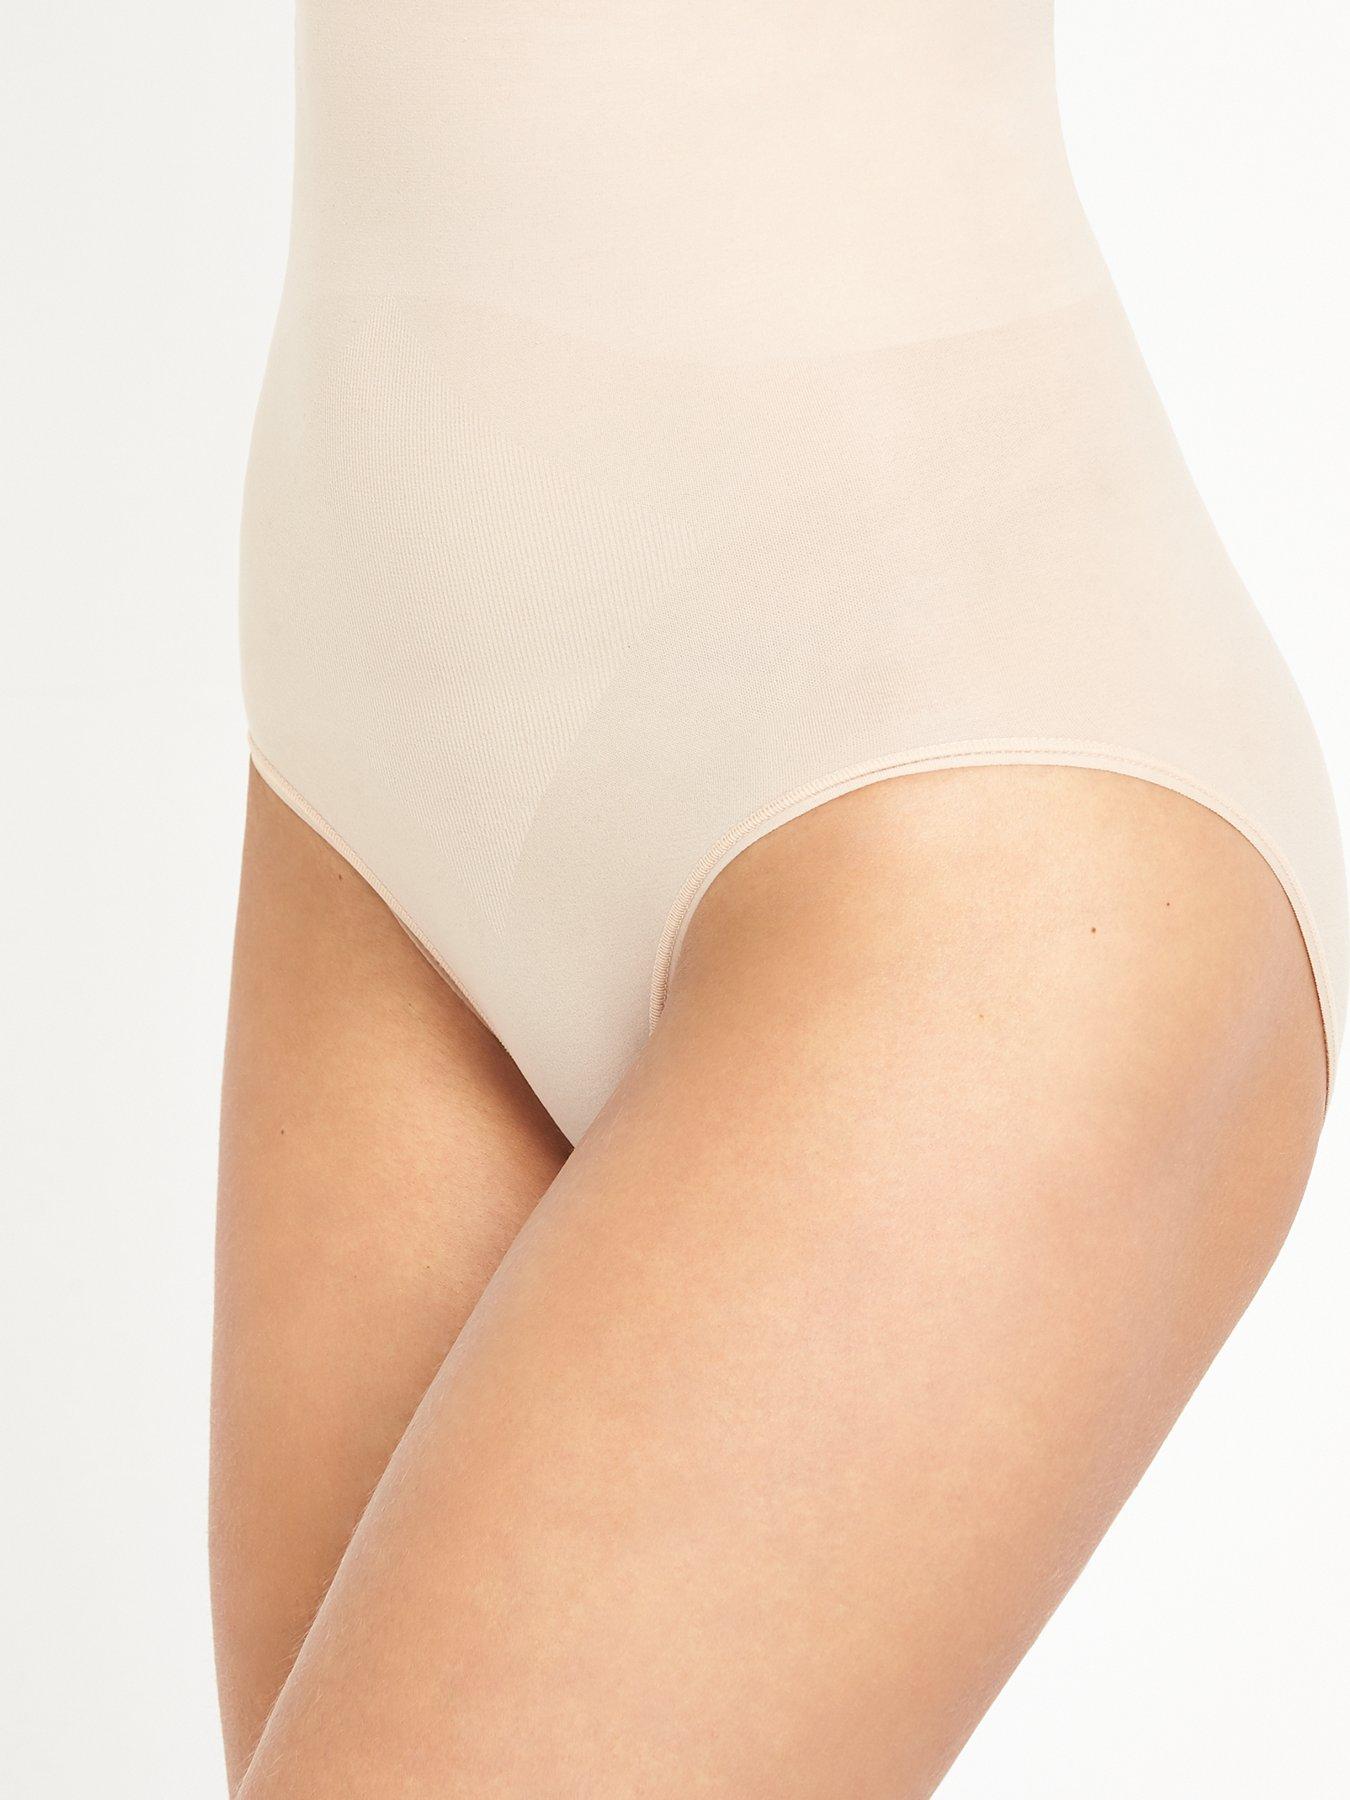 DUMBO KNICKERS DISNEY Panties Underwear Ladies UK Sizes 8 to 20